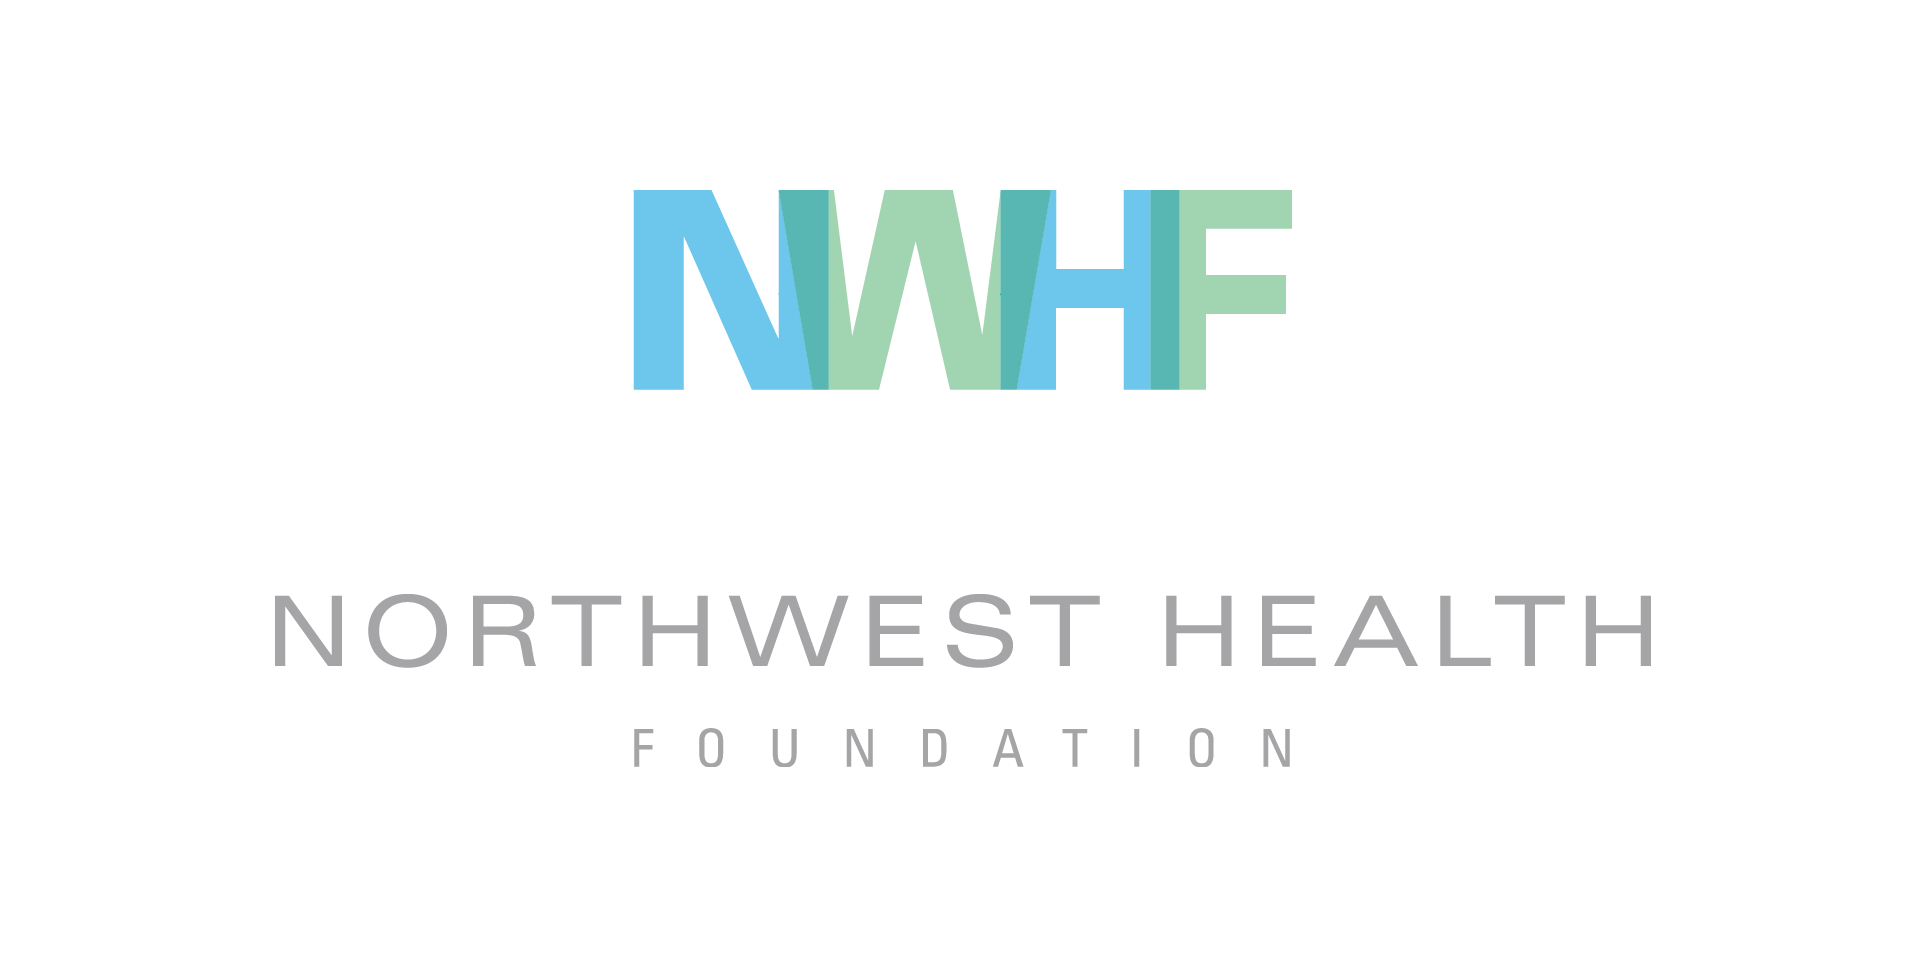 Northwest health foundation